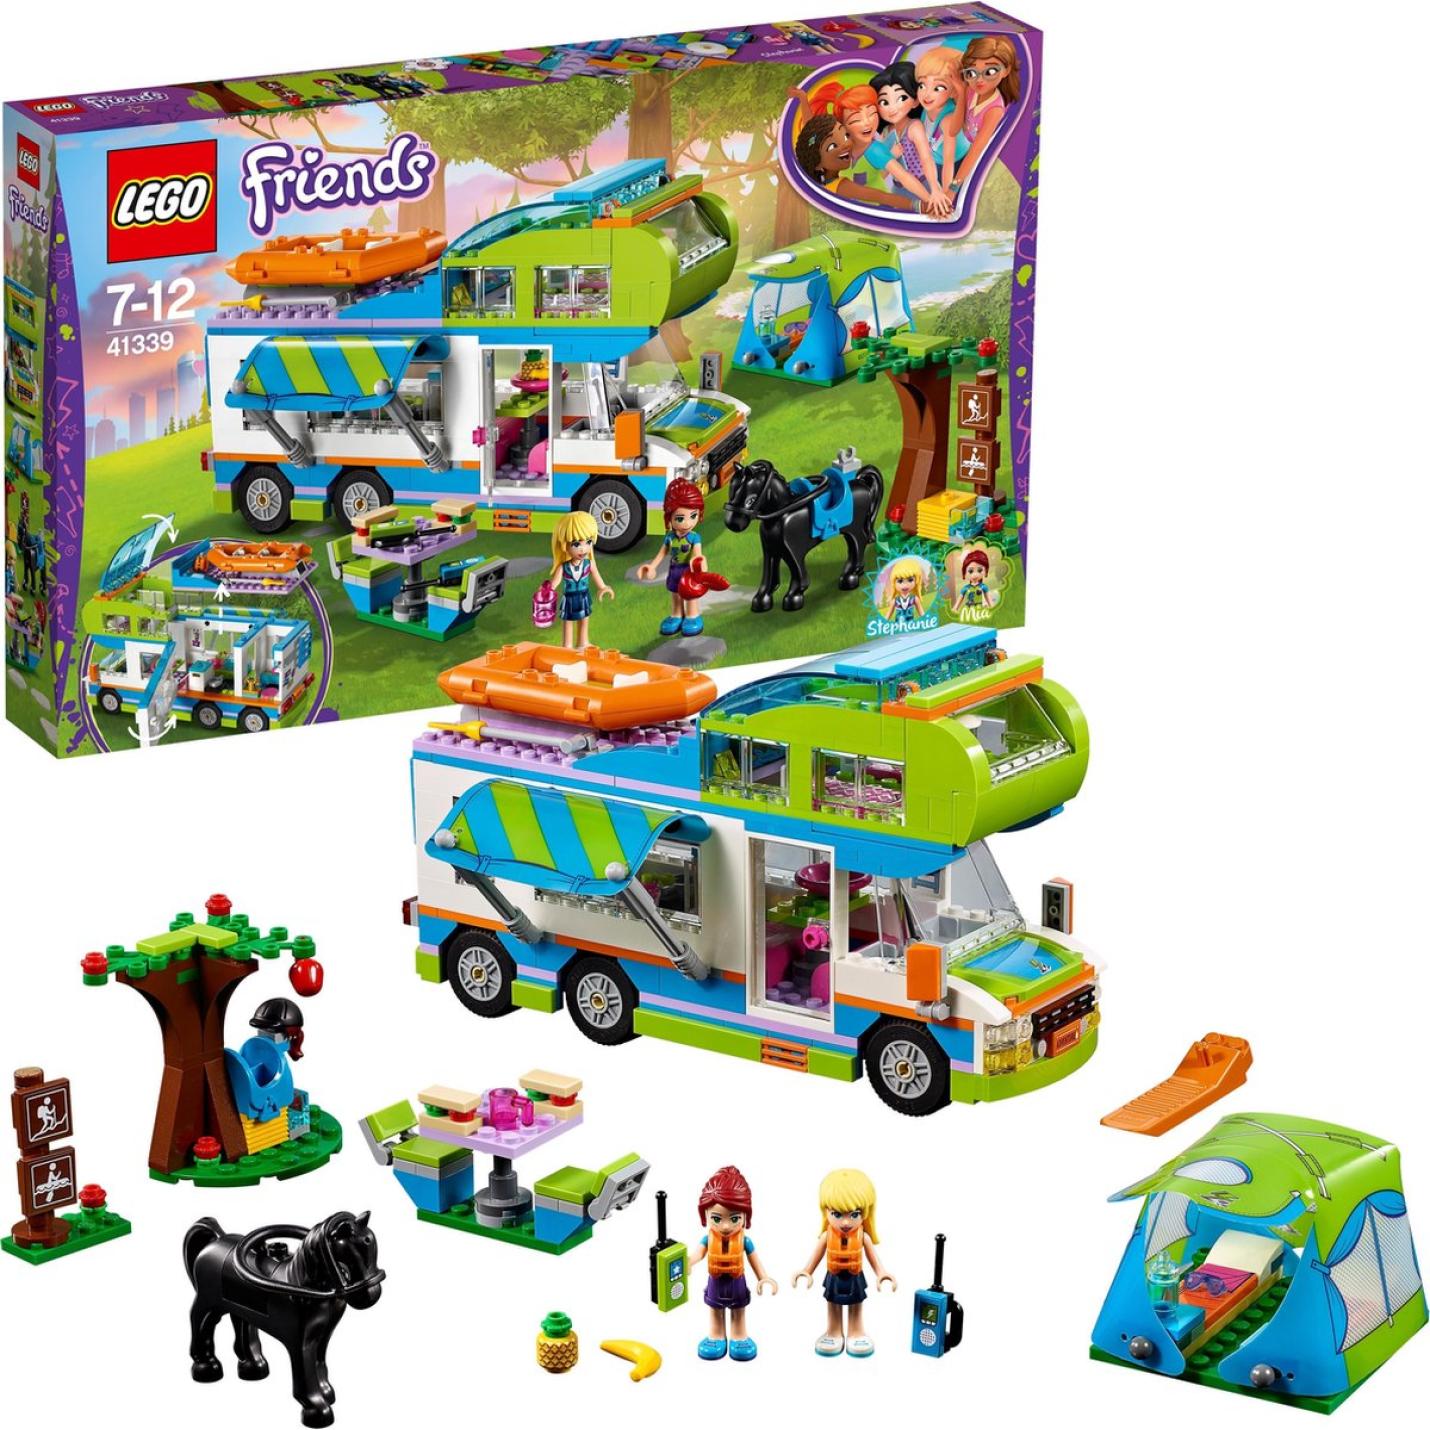 LEGO Friends Mia's Camper - 41339 15